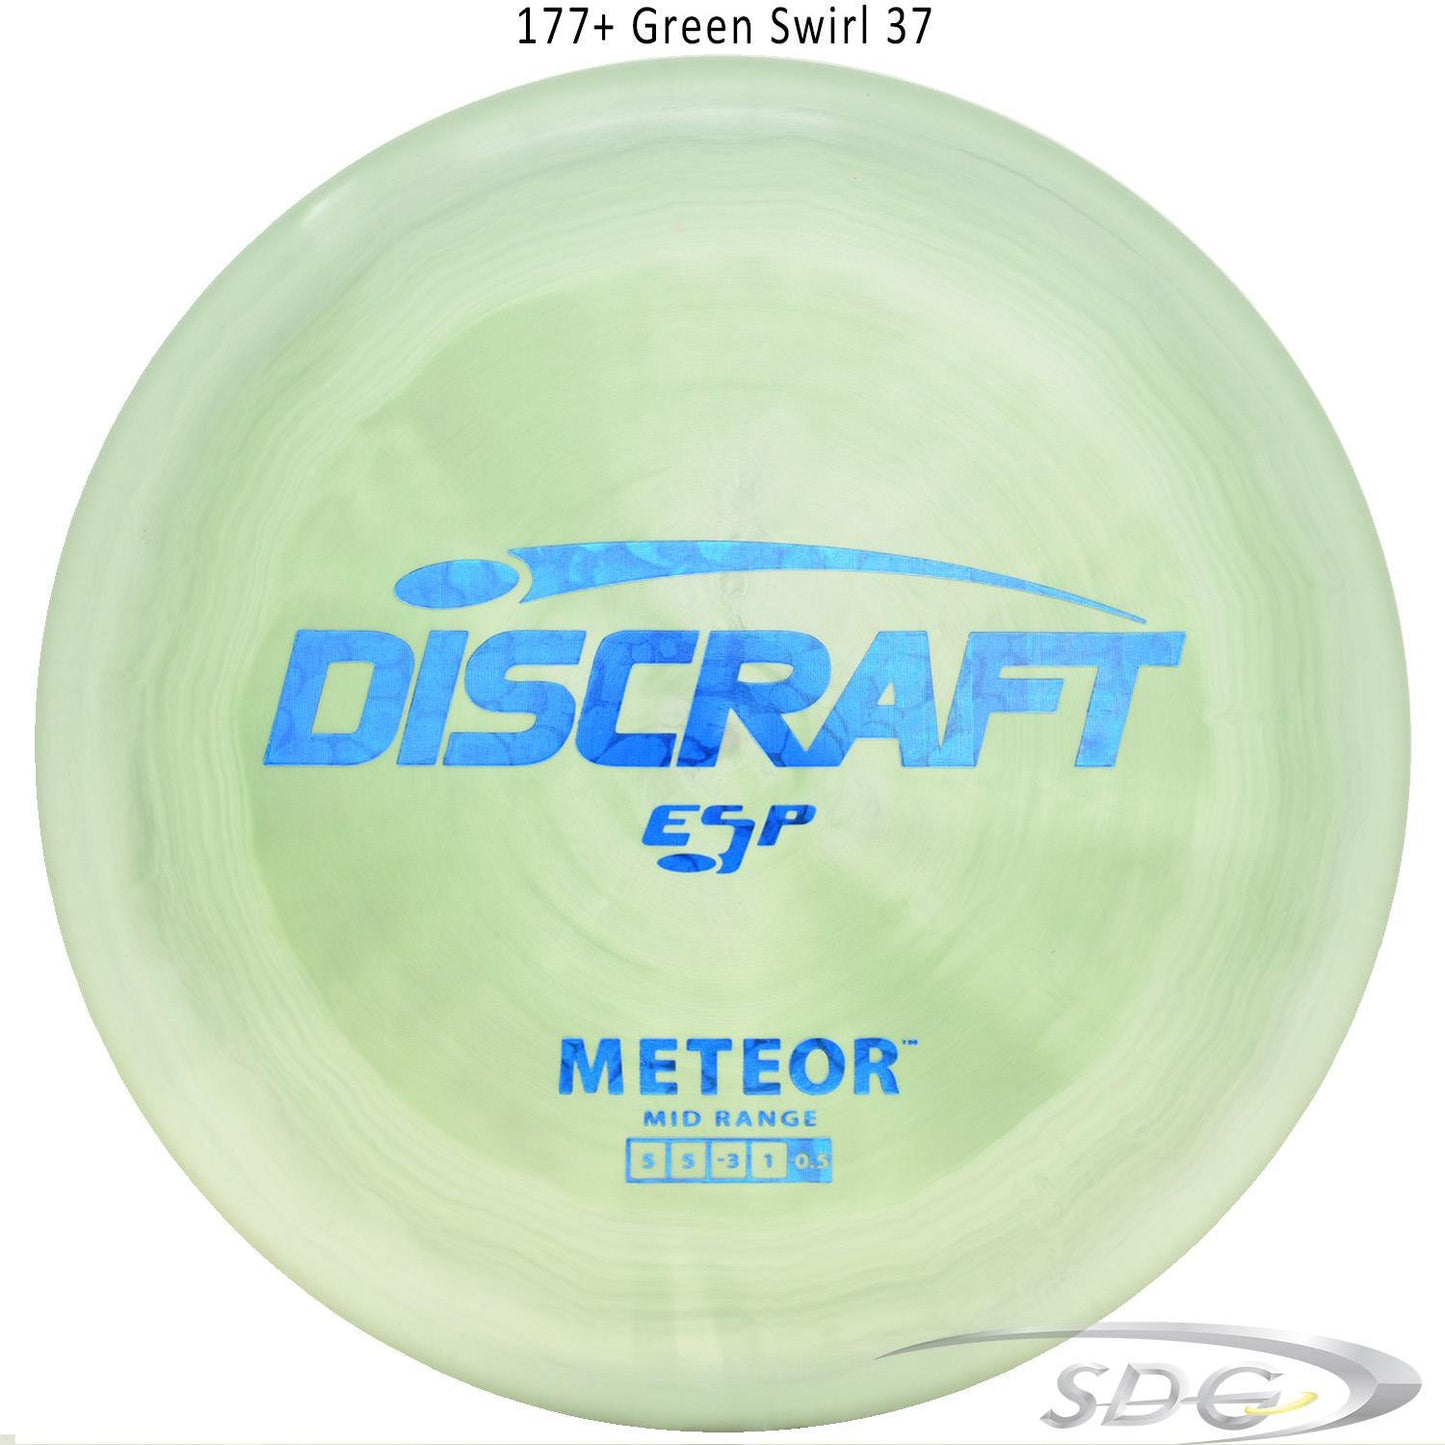 discraft-esp-meteor-disc-golf-mid-range 177+ Green Swirl 37 